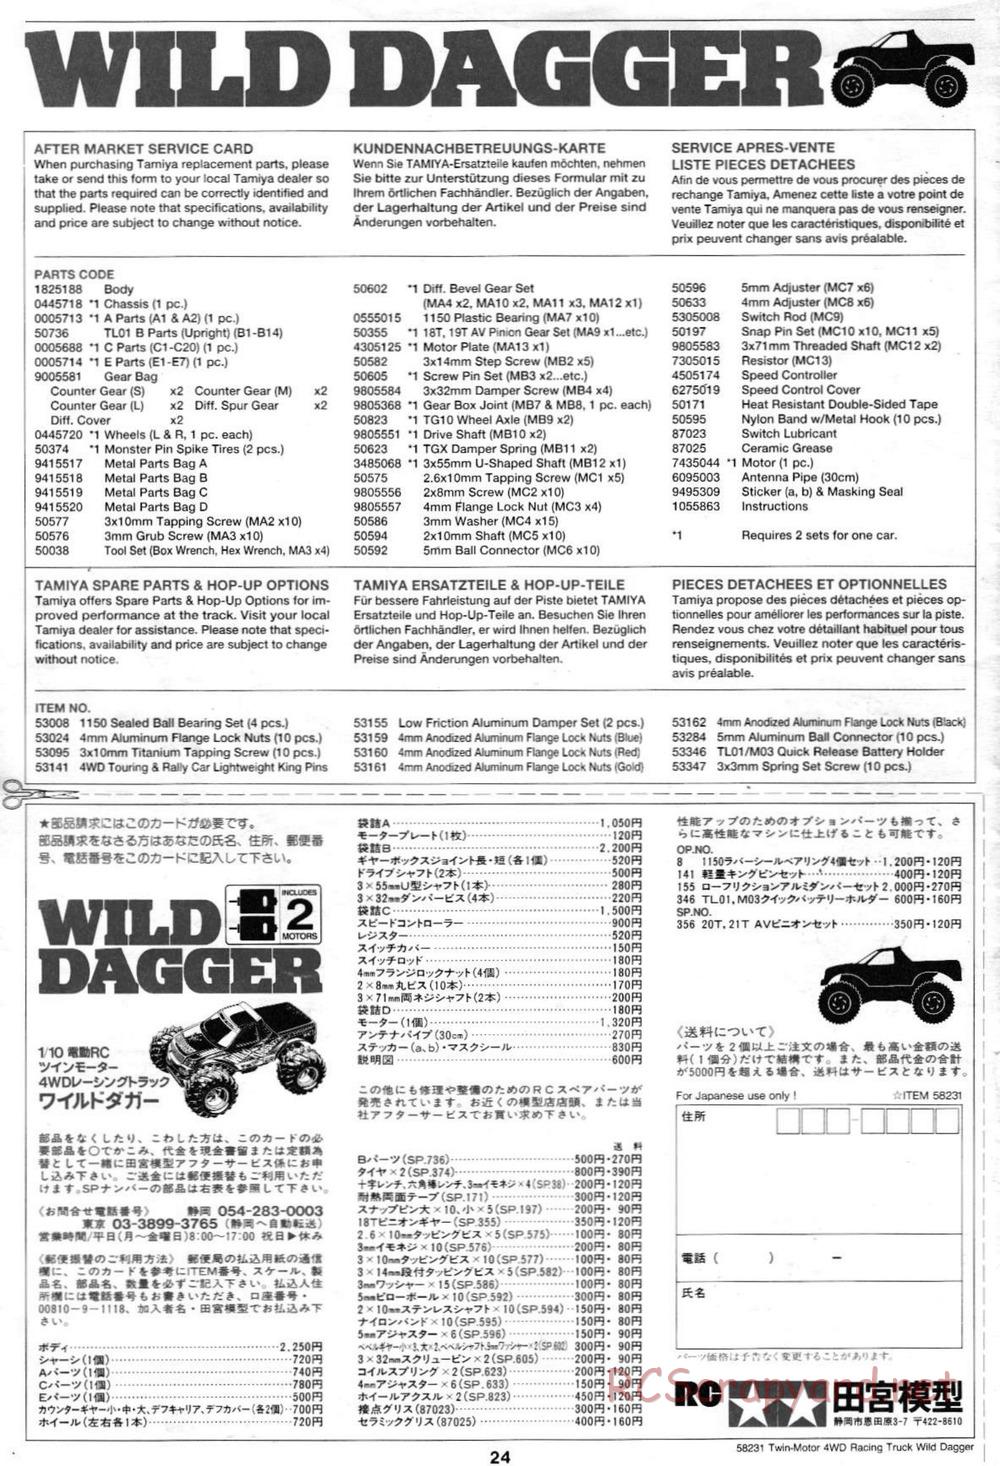 Tamiya - Wild Dagger - WR-01 Chassis - Manual - Page 24